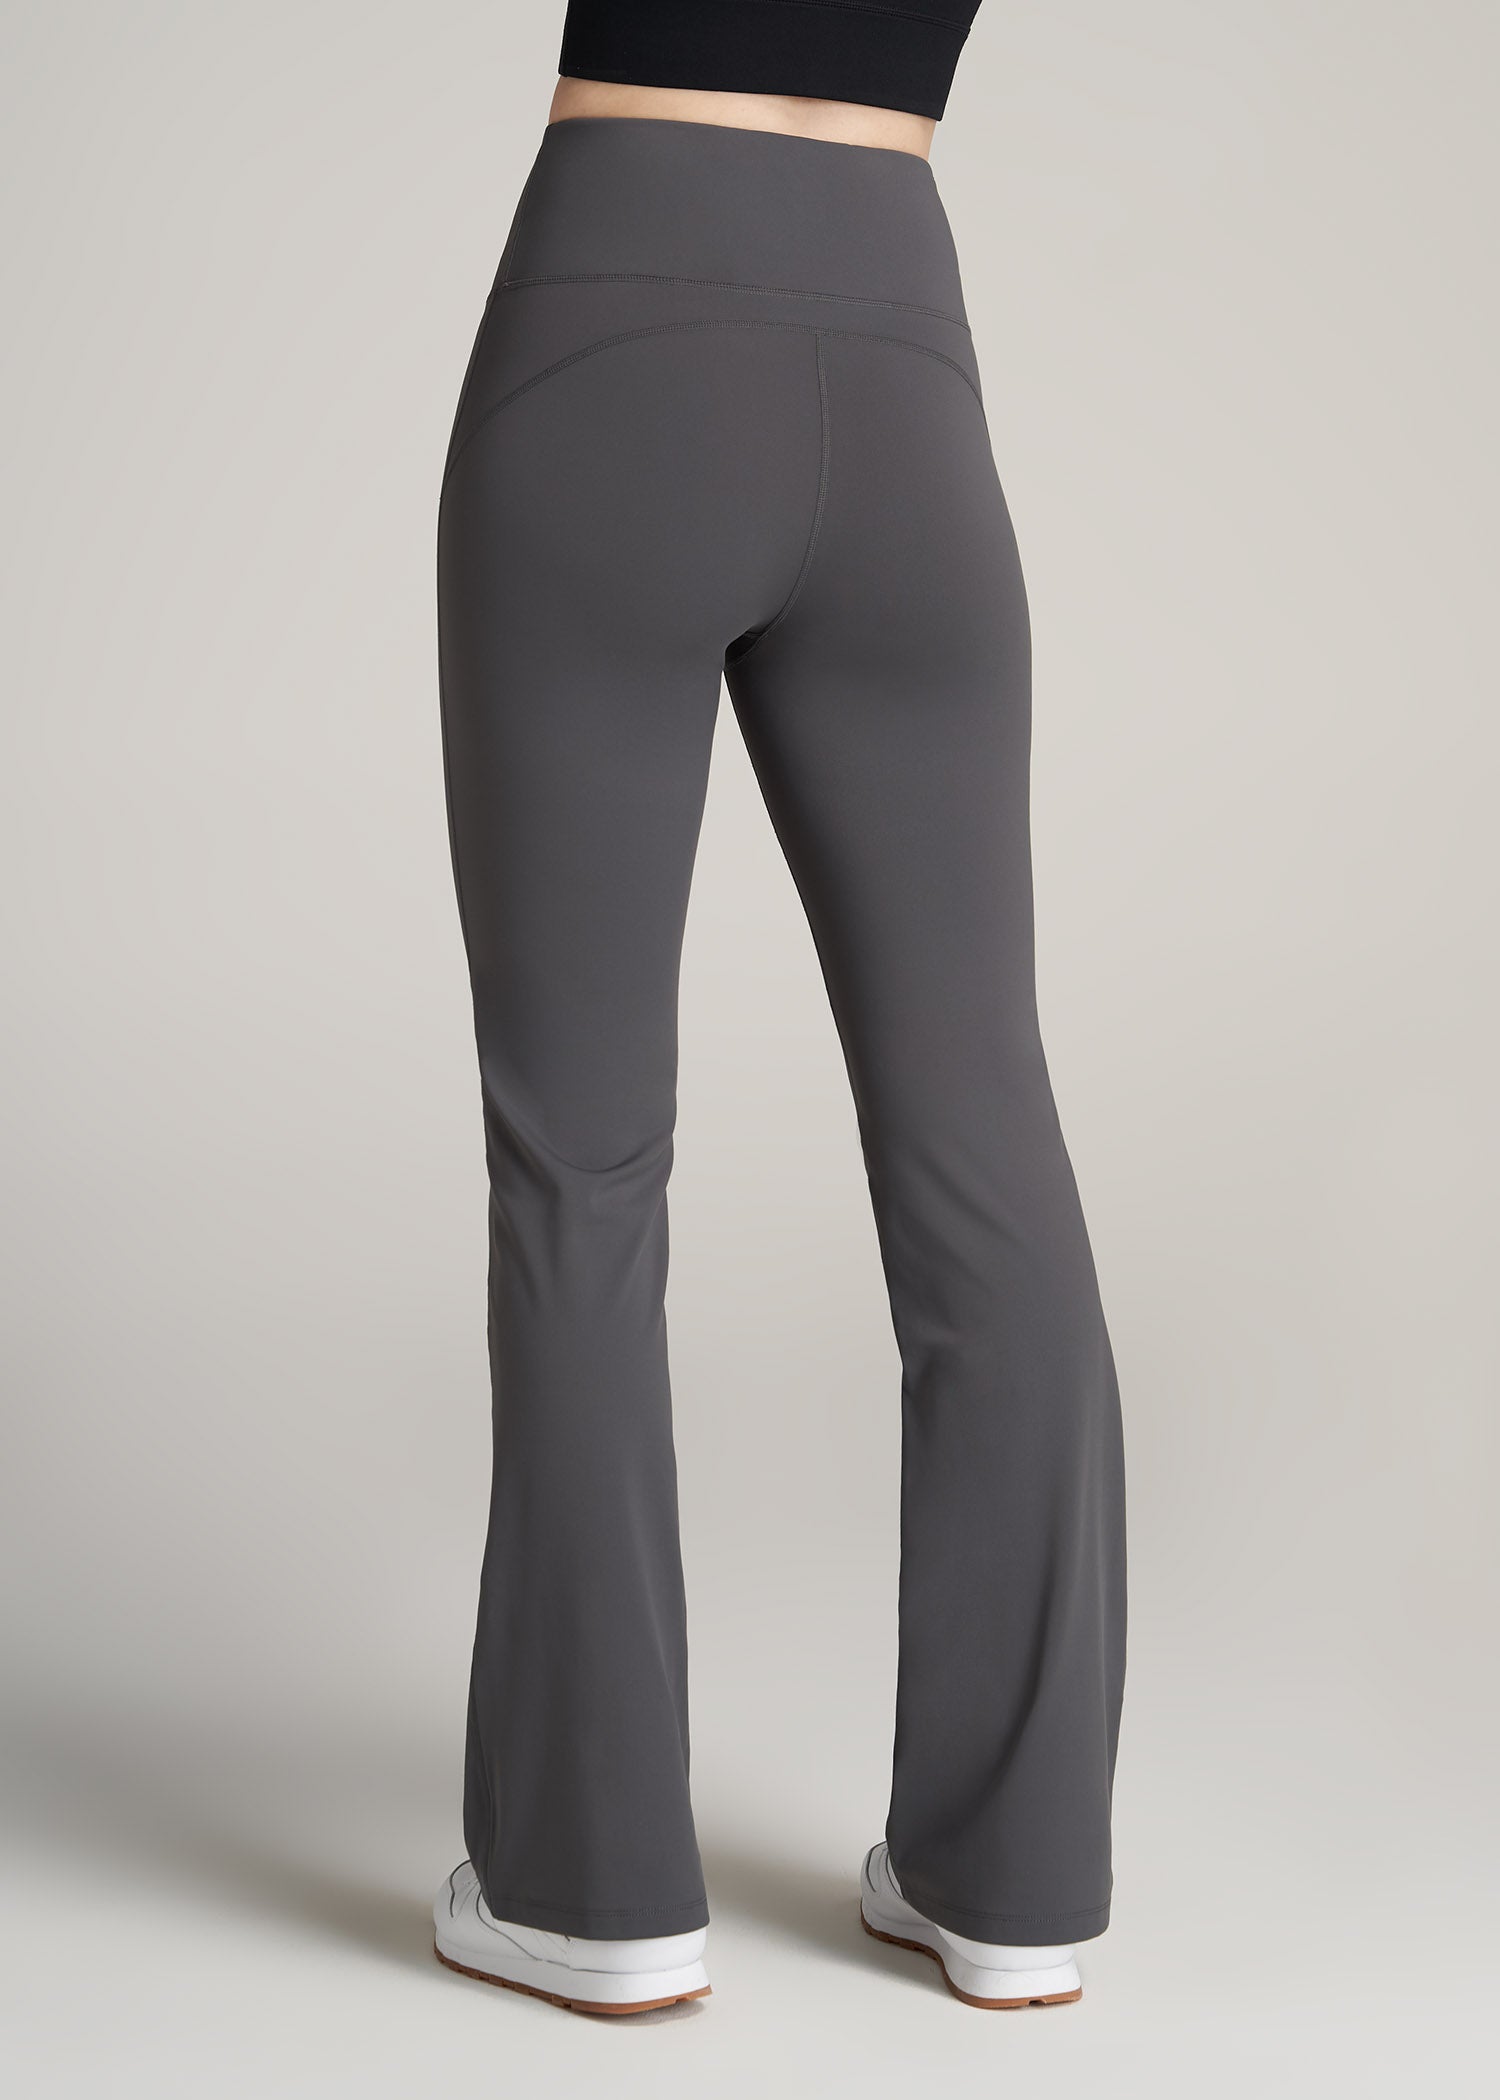 Just Love Yoga Capri Pants for Women (Charcoal, Small)